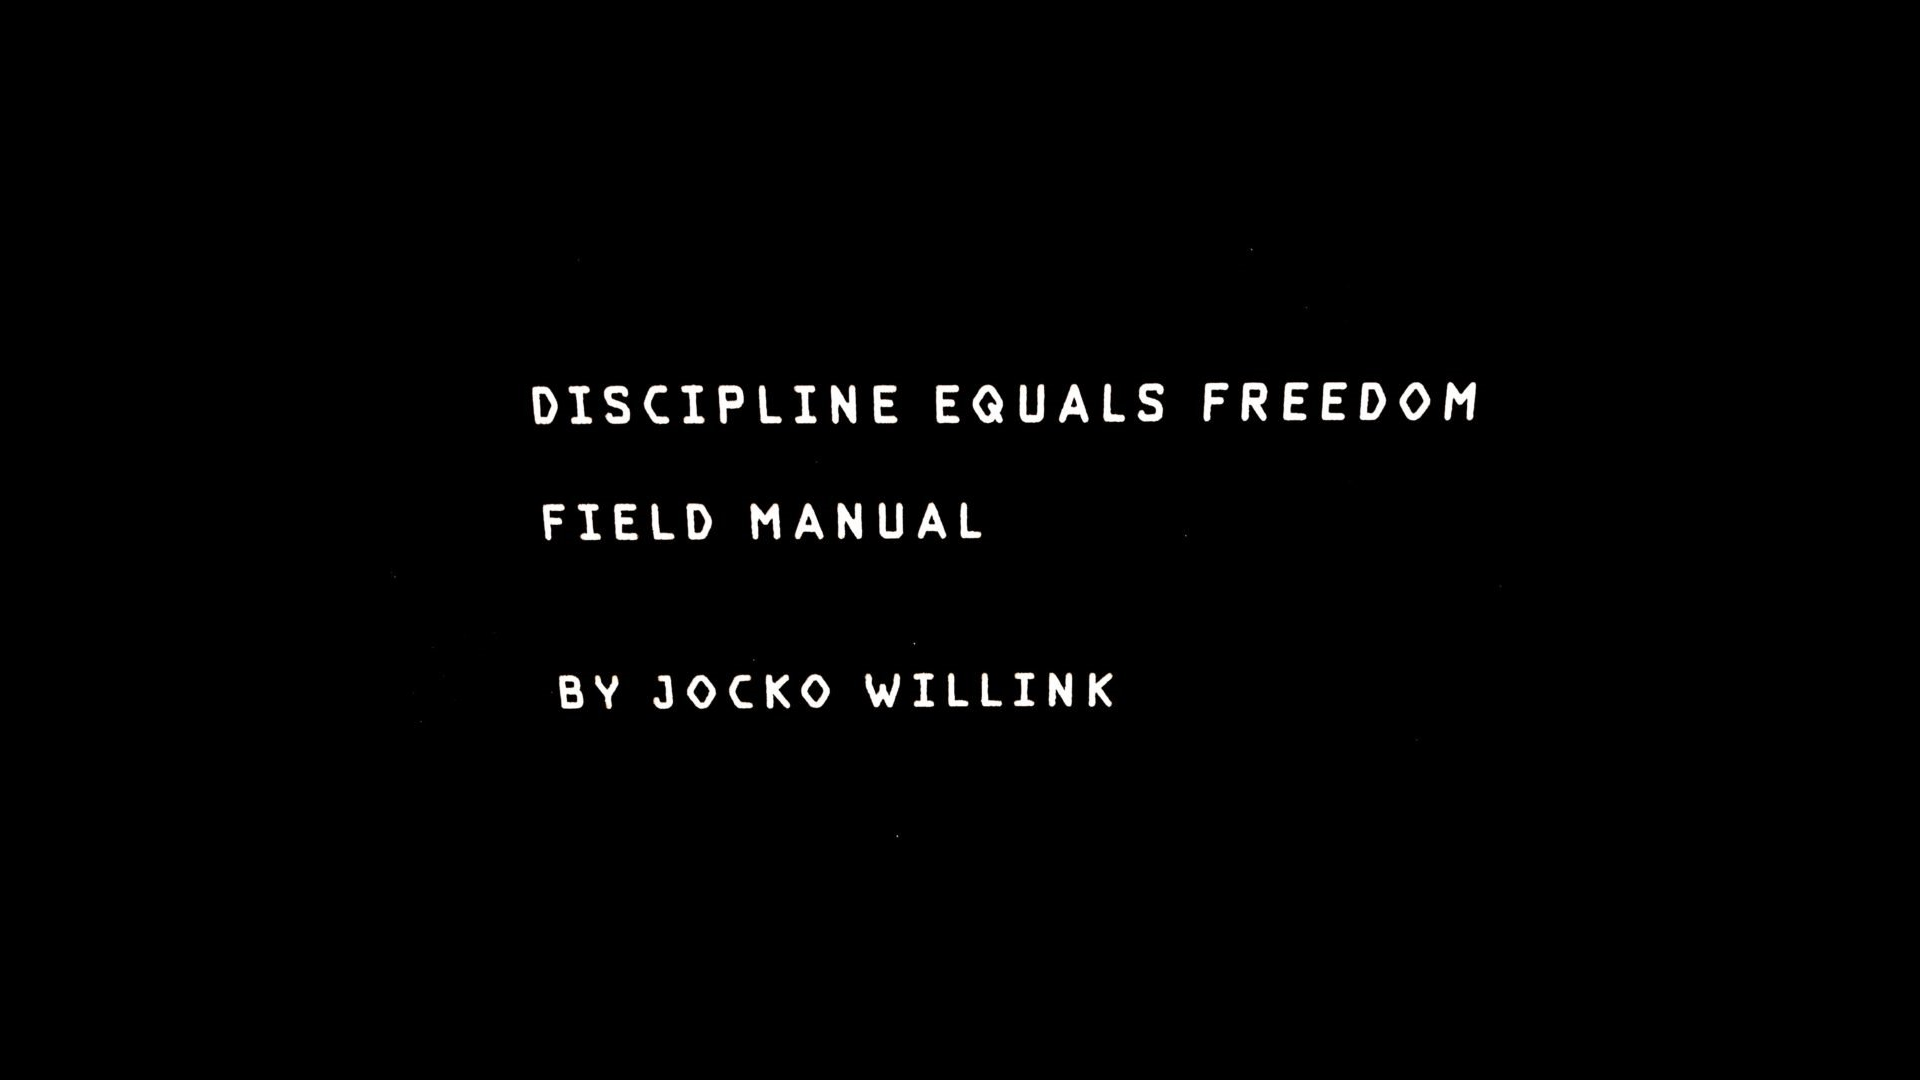 General 1920x1080 minimalism motivational black freedom white text